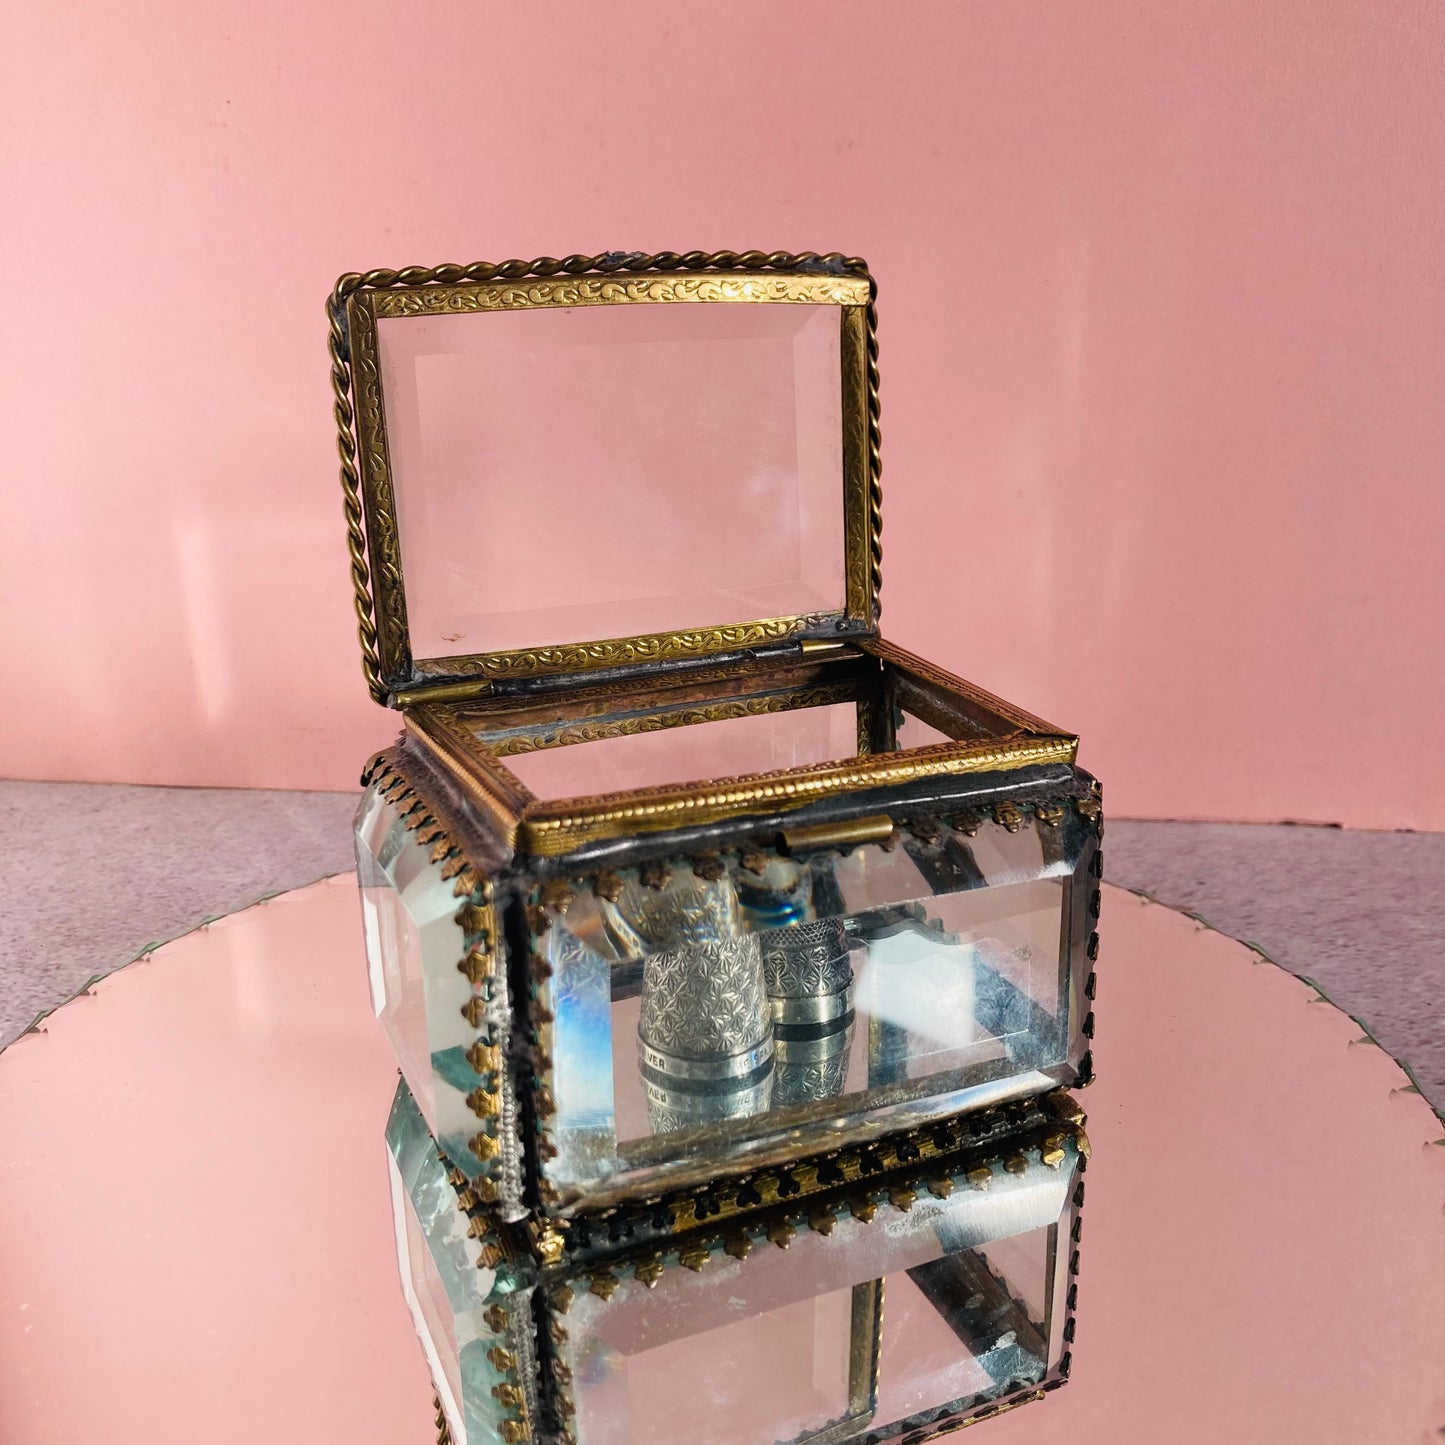 Vintage Brass Jewellery Casket | Trinket Box | The Urban Vintage Affair